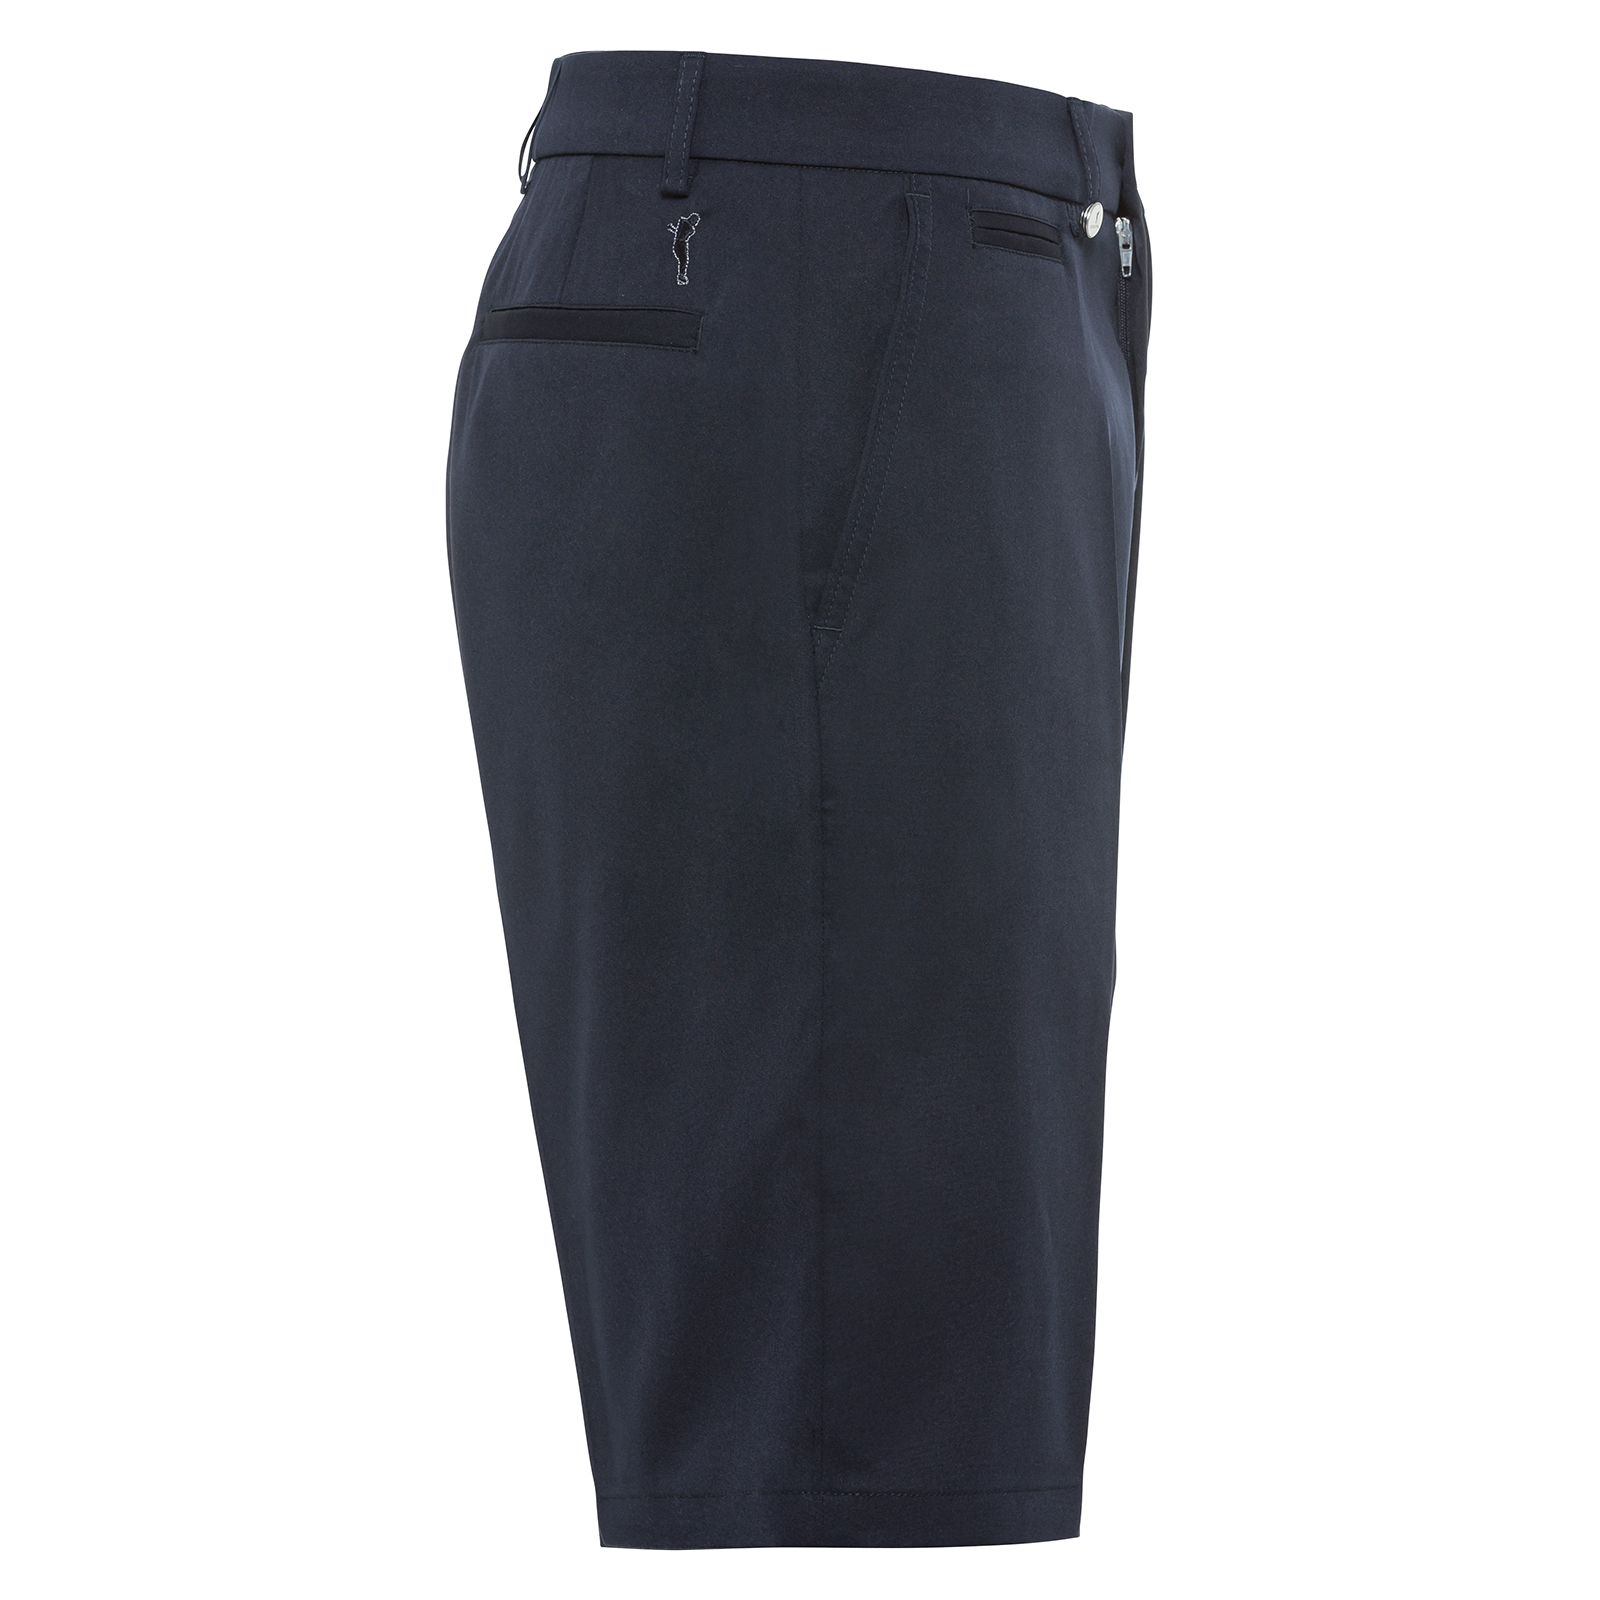 Men's durable, quick dry golf Bermuda shorts